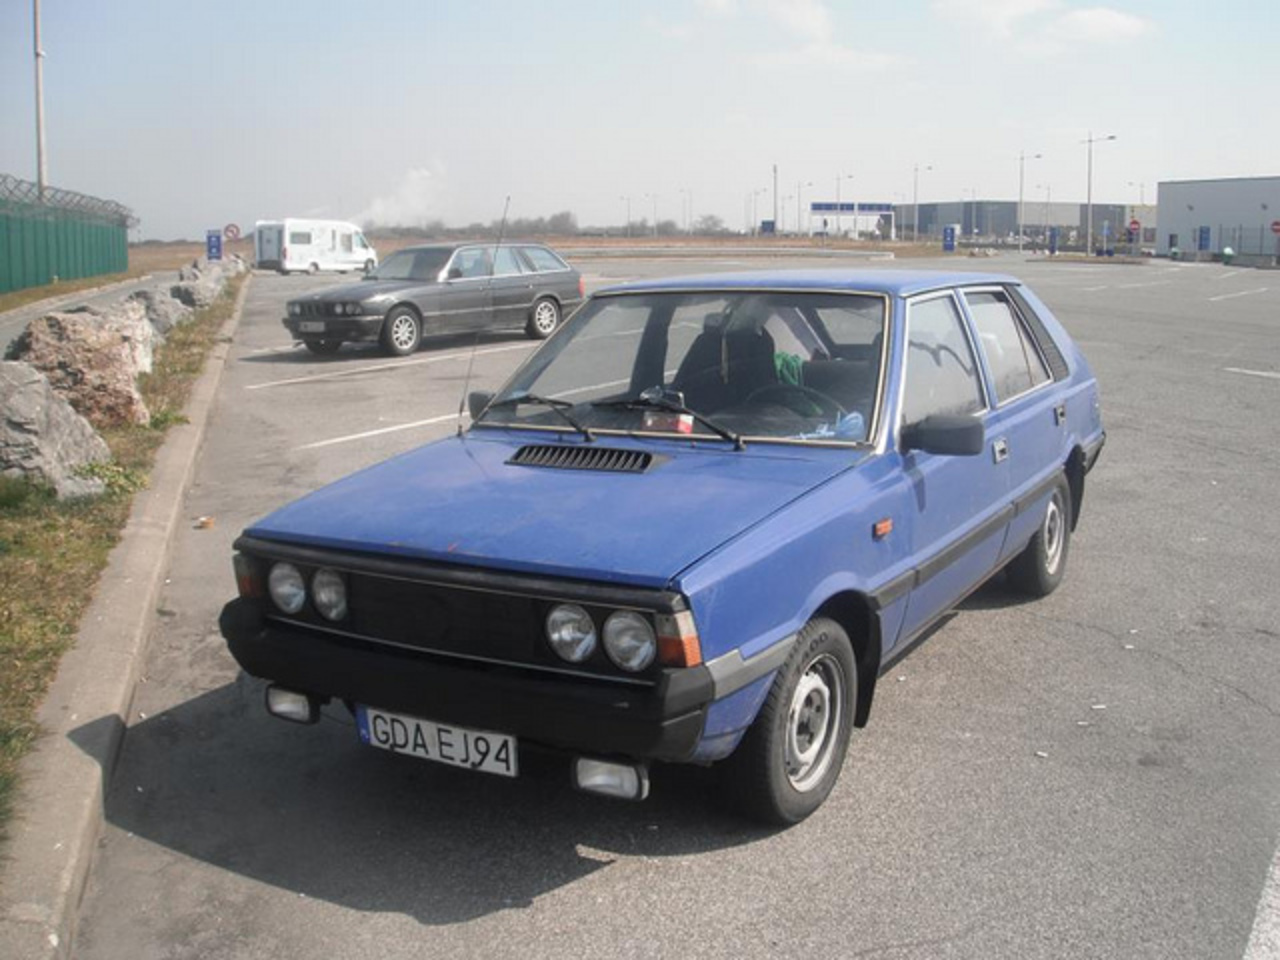 Flickr: The Eastern European Cars Pool